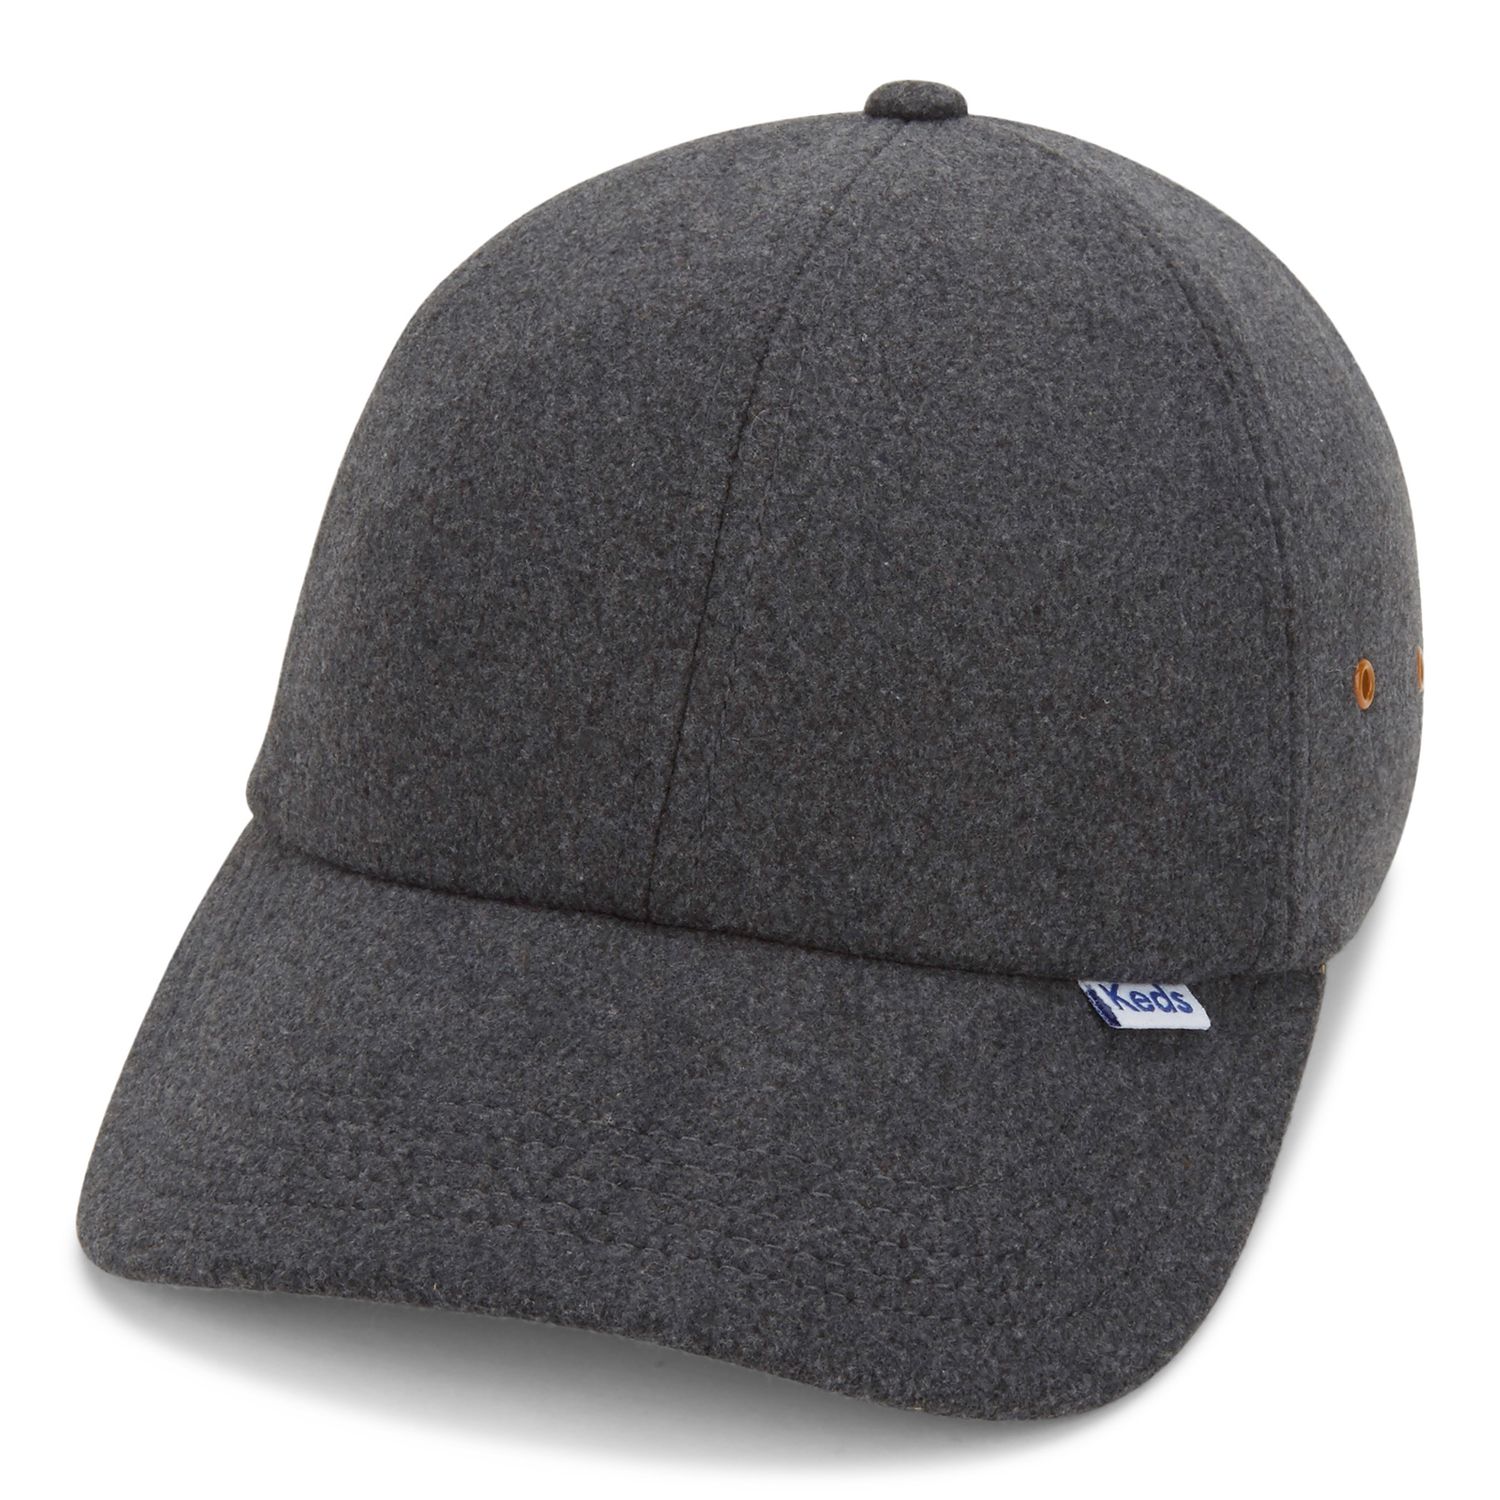 Wool Baseball Hat on Sale, 54% OFF | www.pegasusaerogroup.com